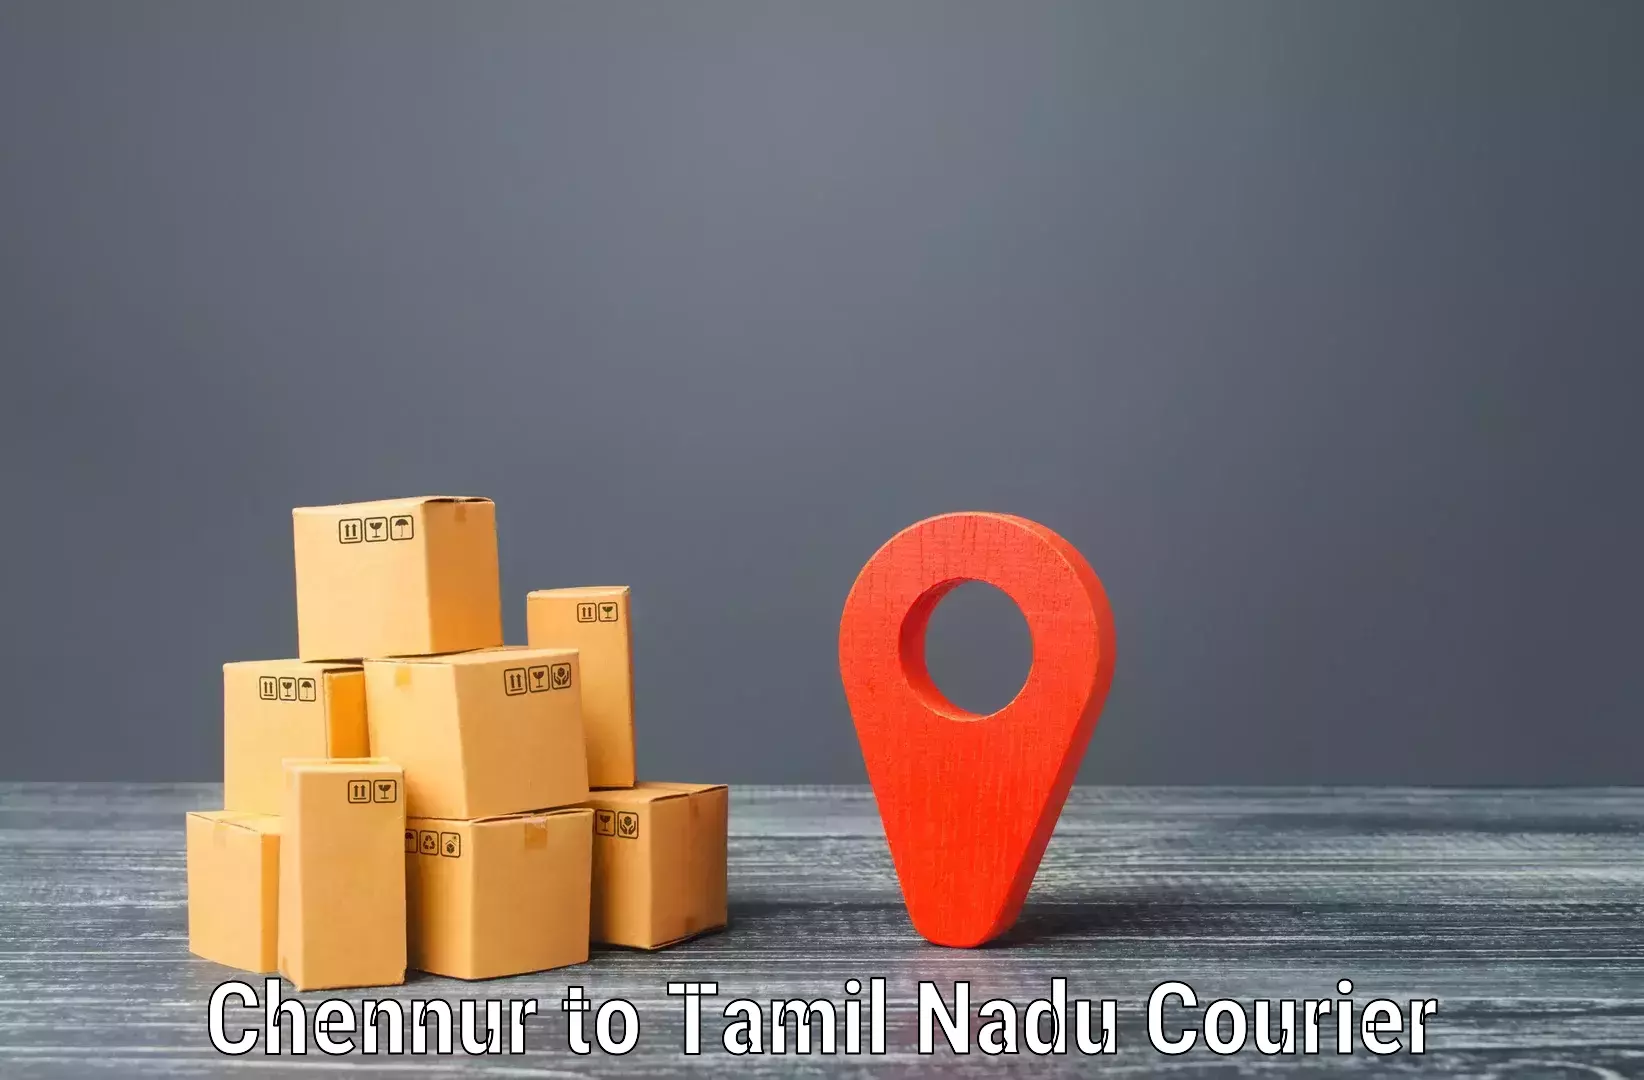 Specialized shipment handling in Chennur to Cuddalore